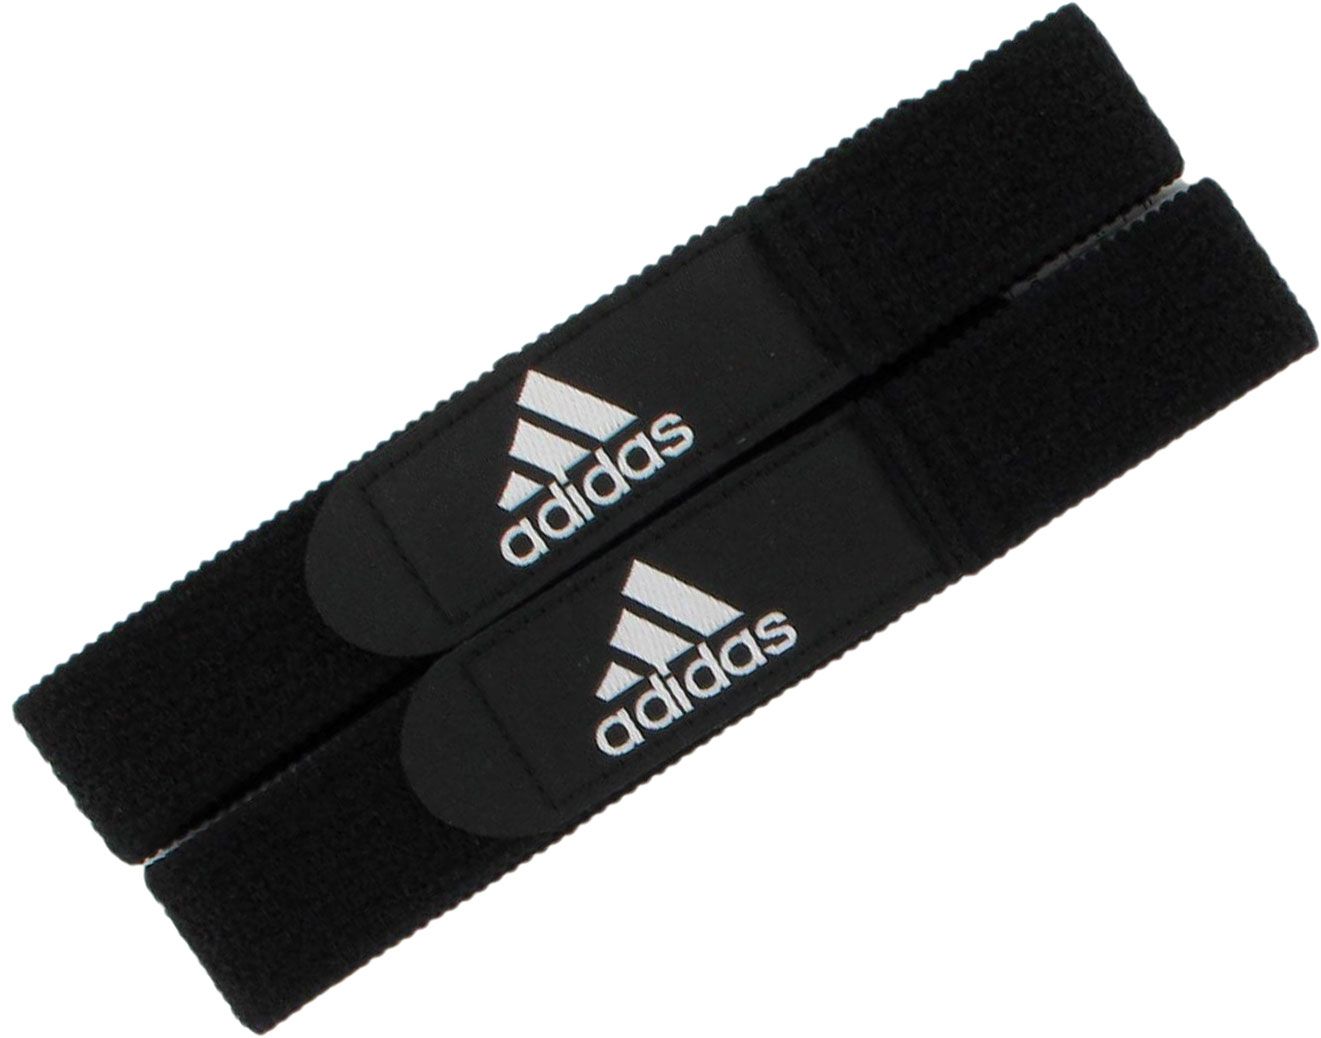 adidas shin guard straps